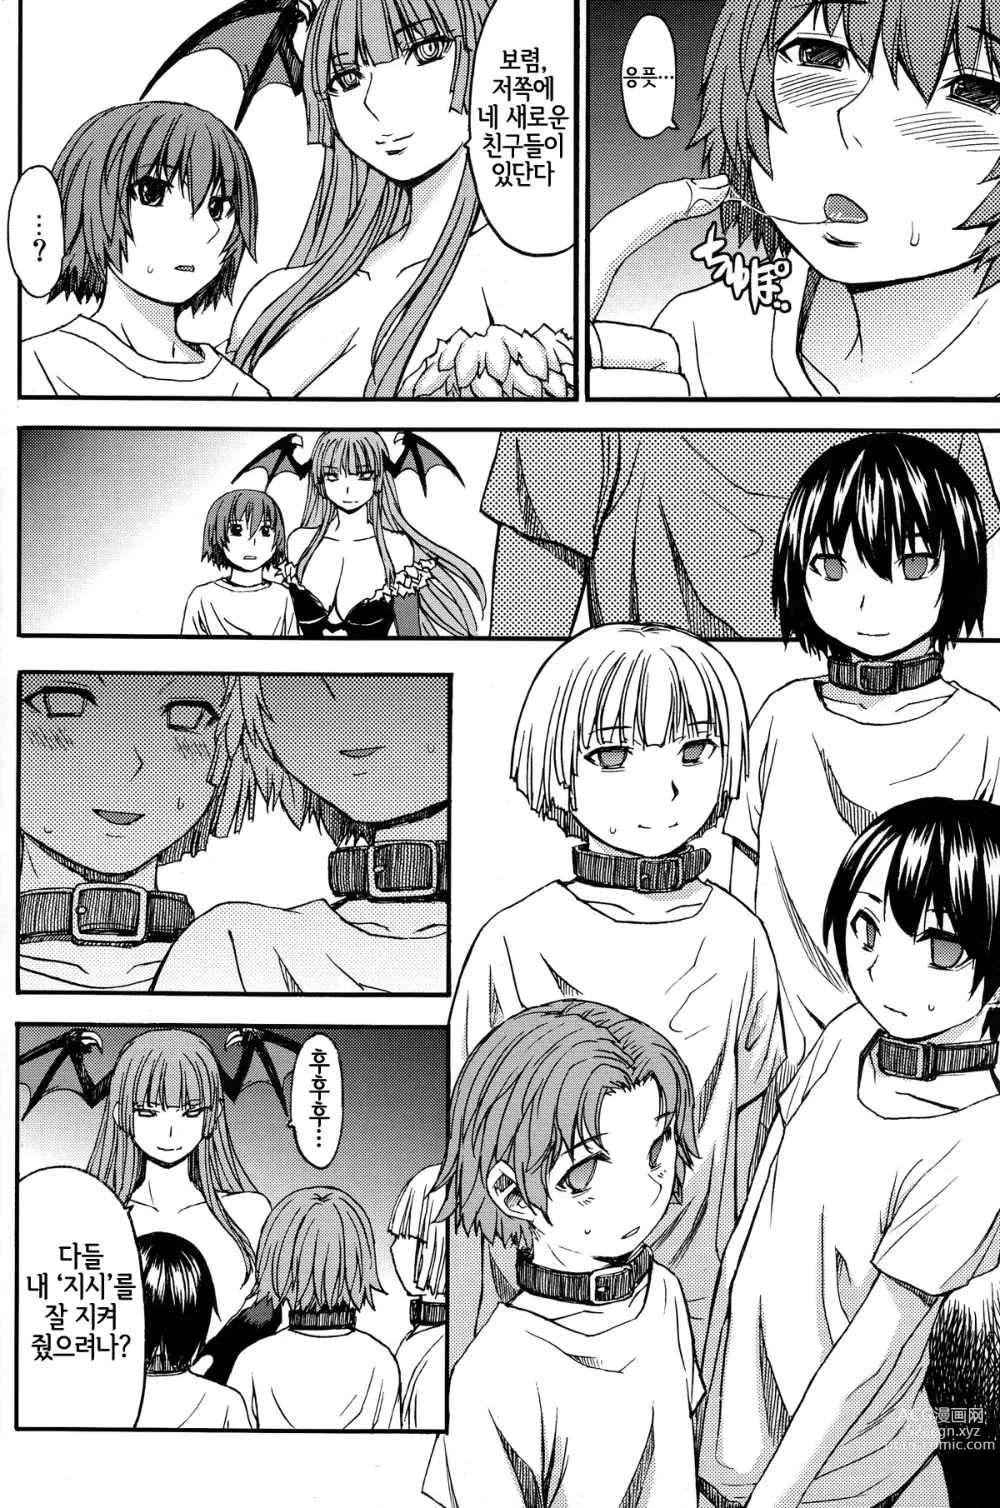 Page 5 of doujinshi 음마와 소년